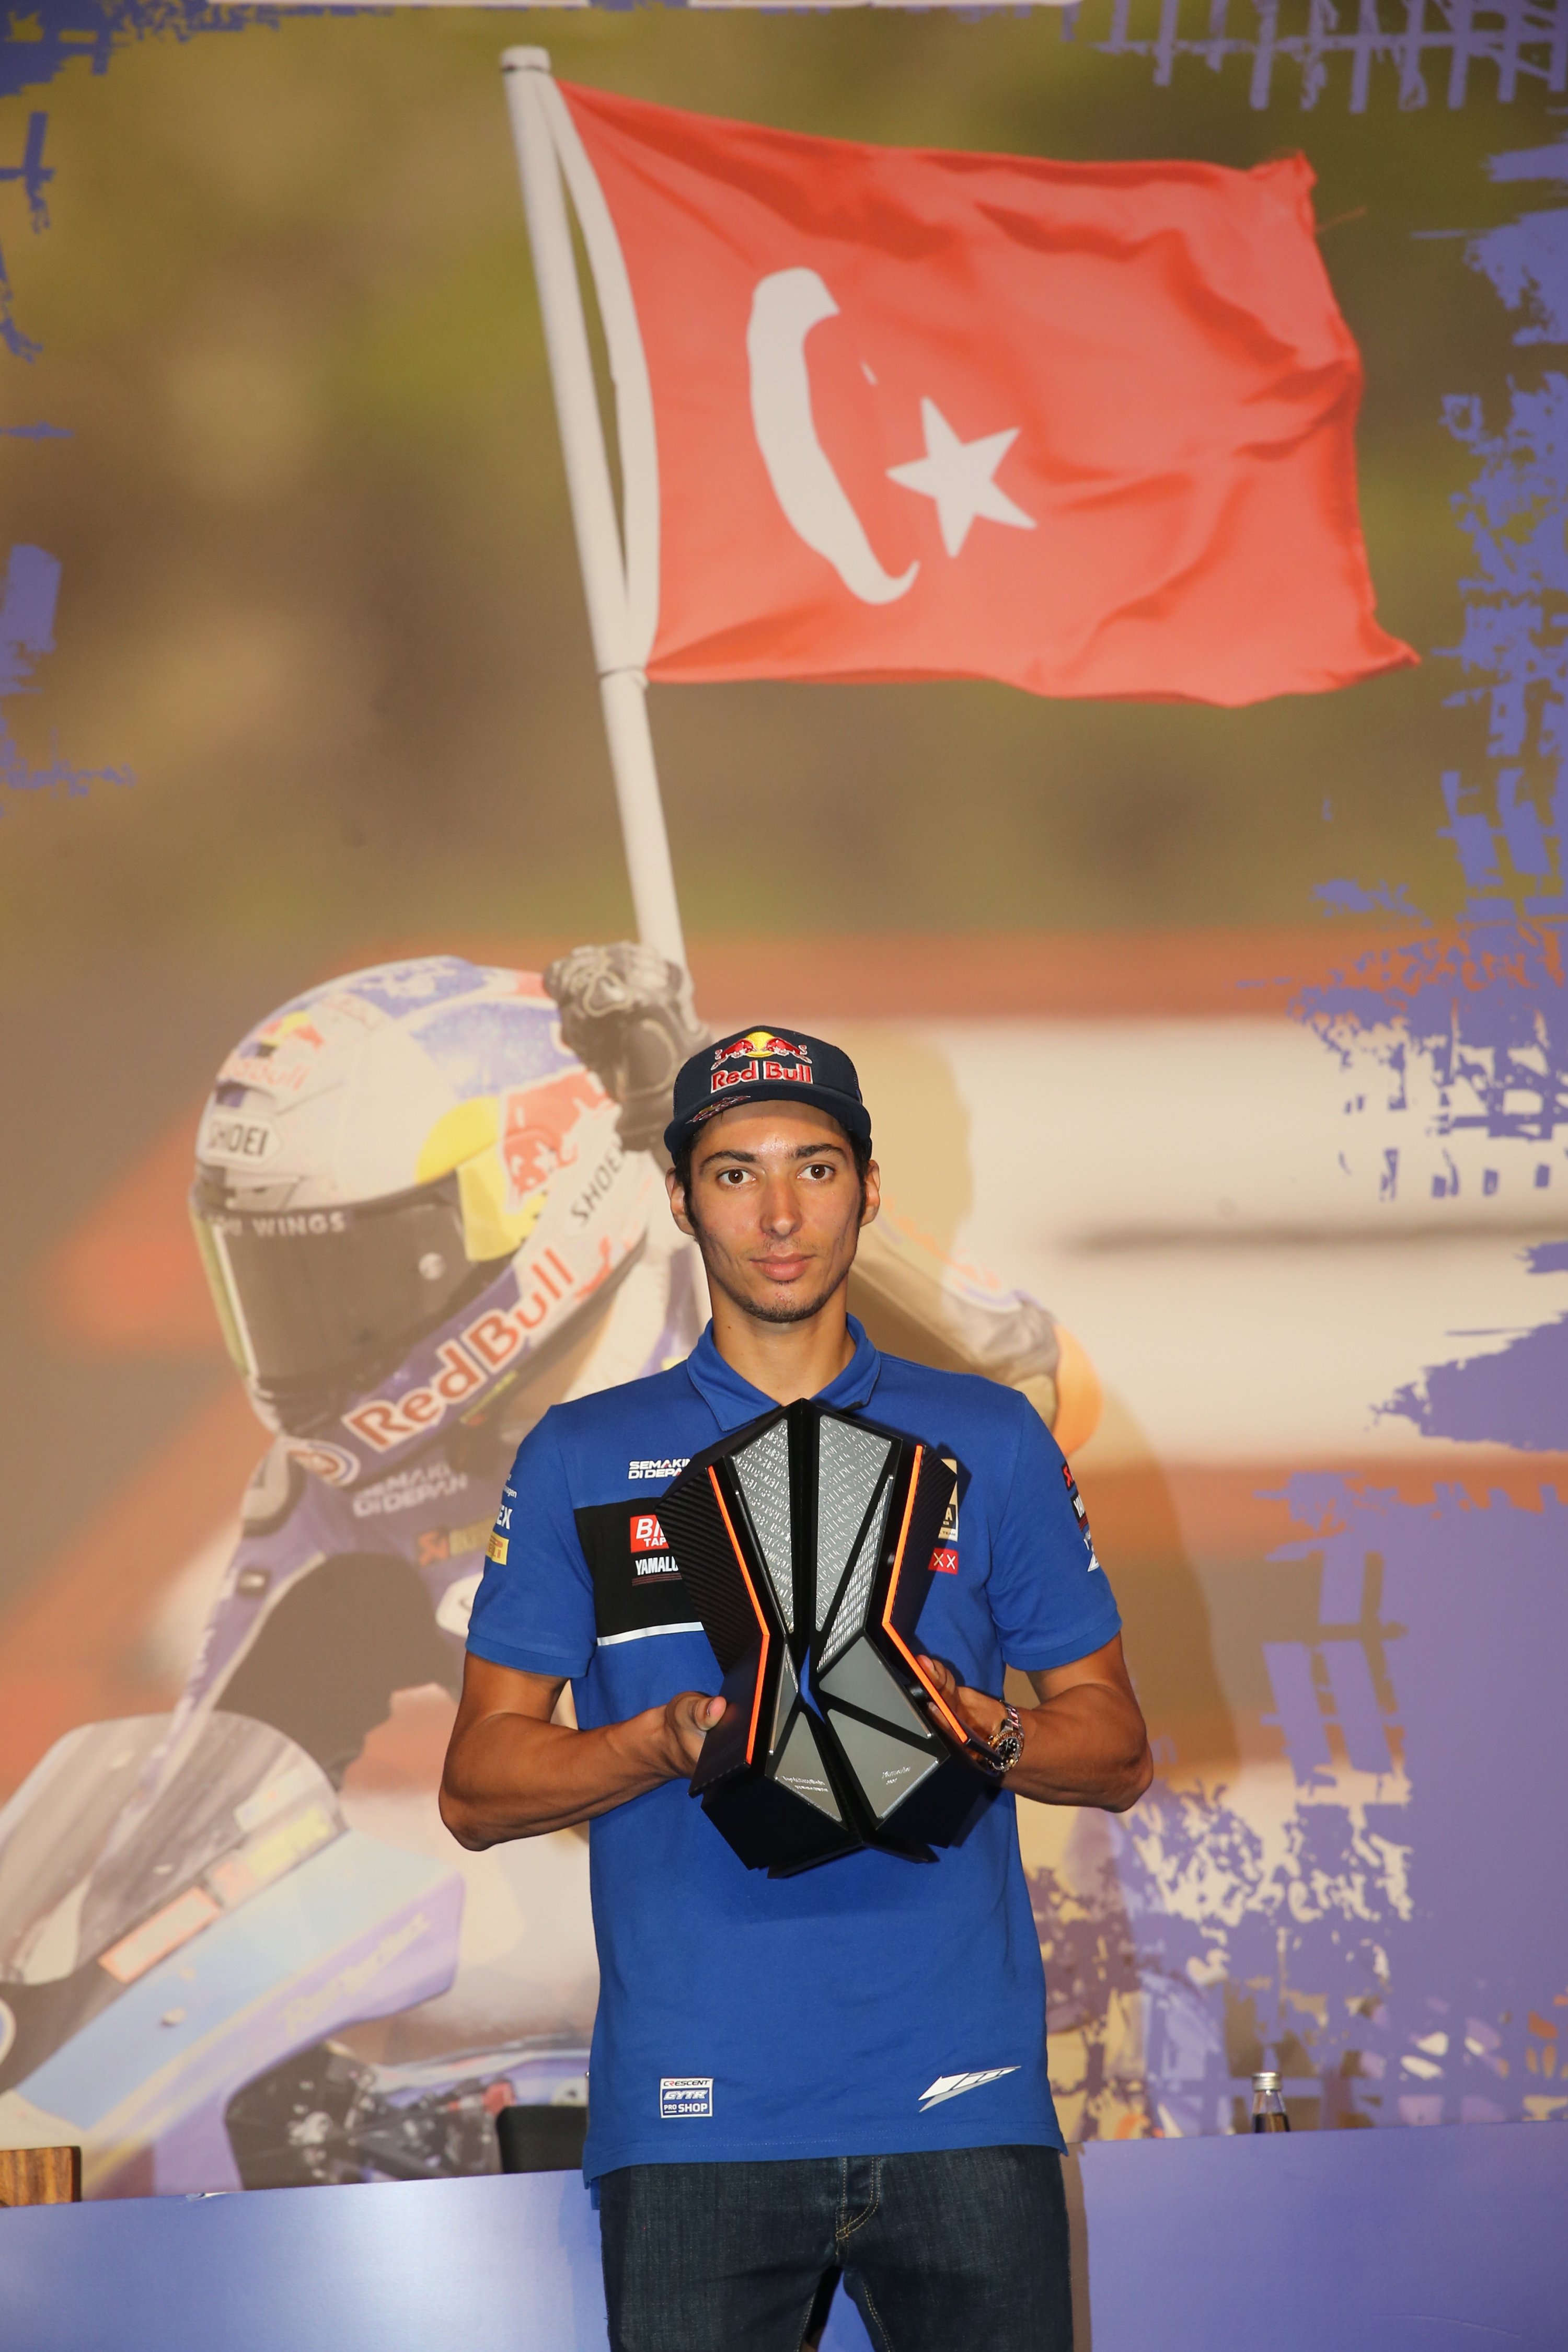 The 2021 Superbike World Championship title winner Toprak Razatlıoğlu (L) poses with the trophy at a press conference, Istanbul, Turkey, Nov. 23, 2021. (AA Photo)